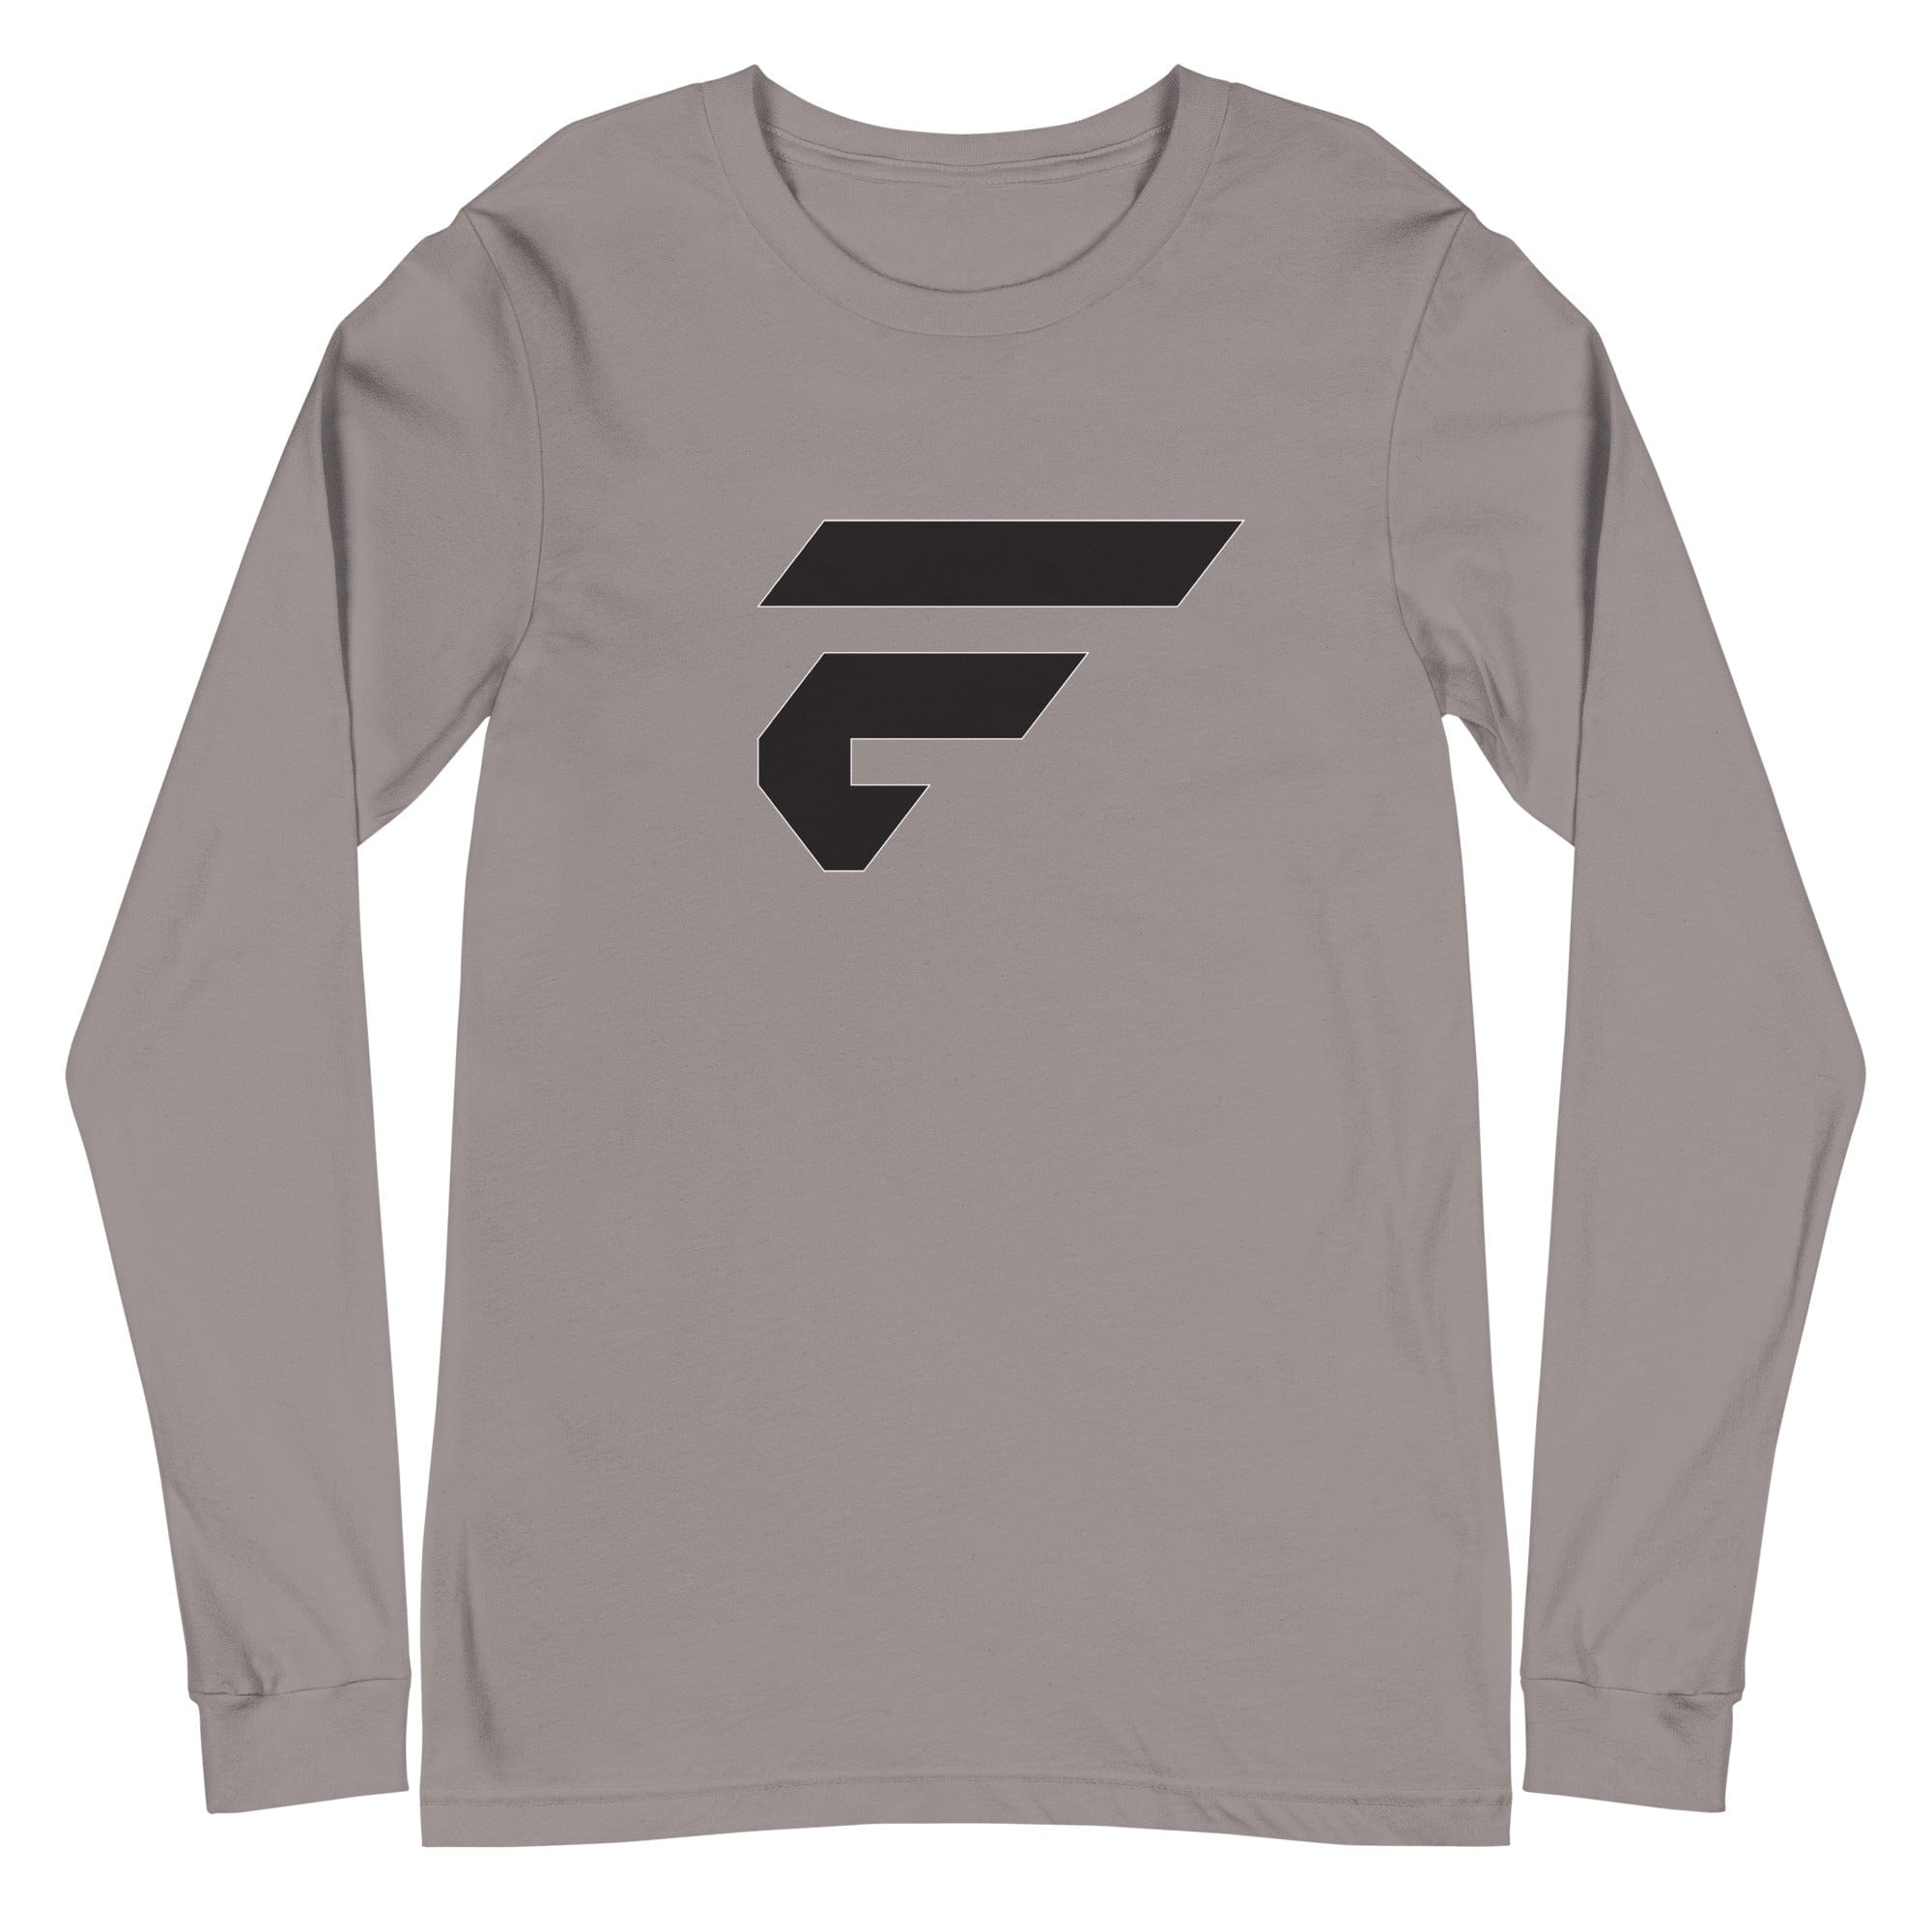 Grey unisex cotton longsleeve shirt with Fire Cornhole F logo in black